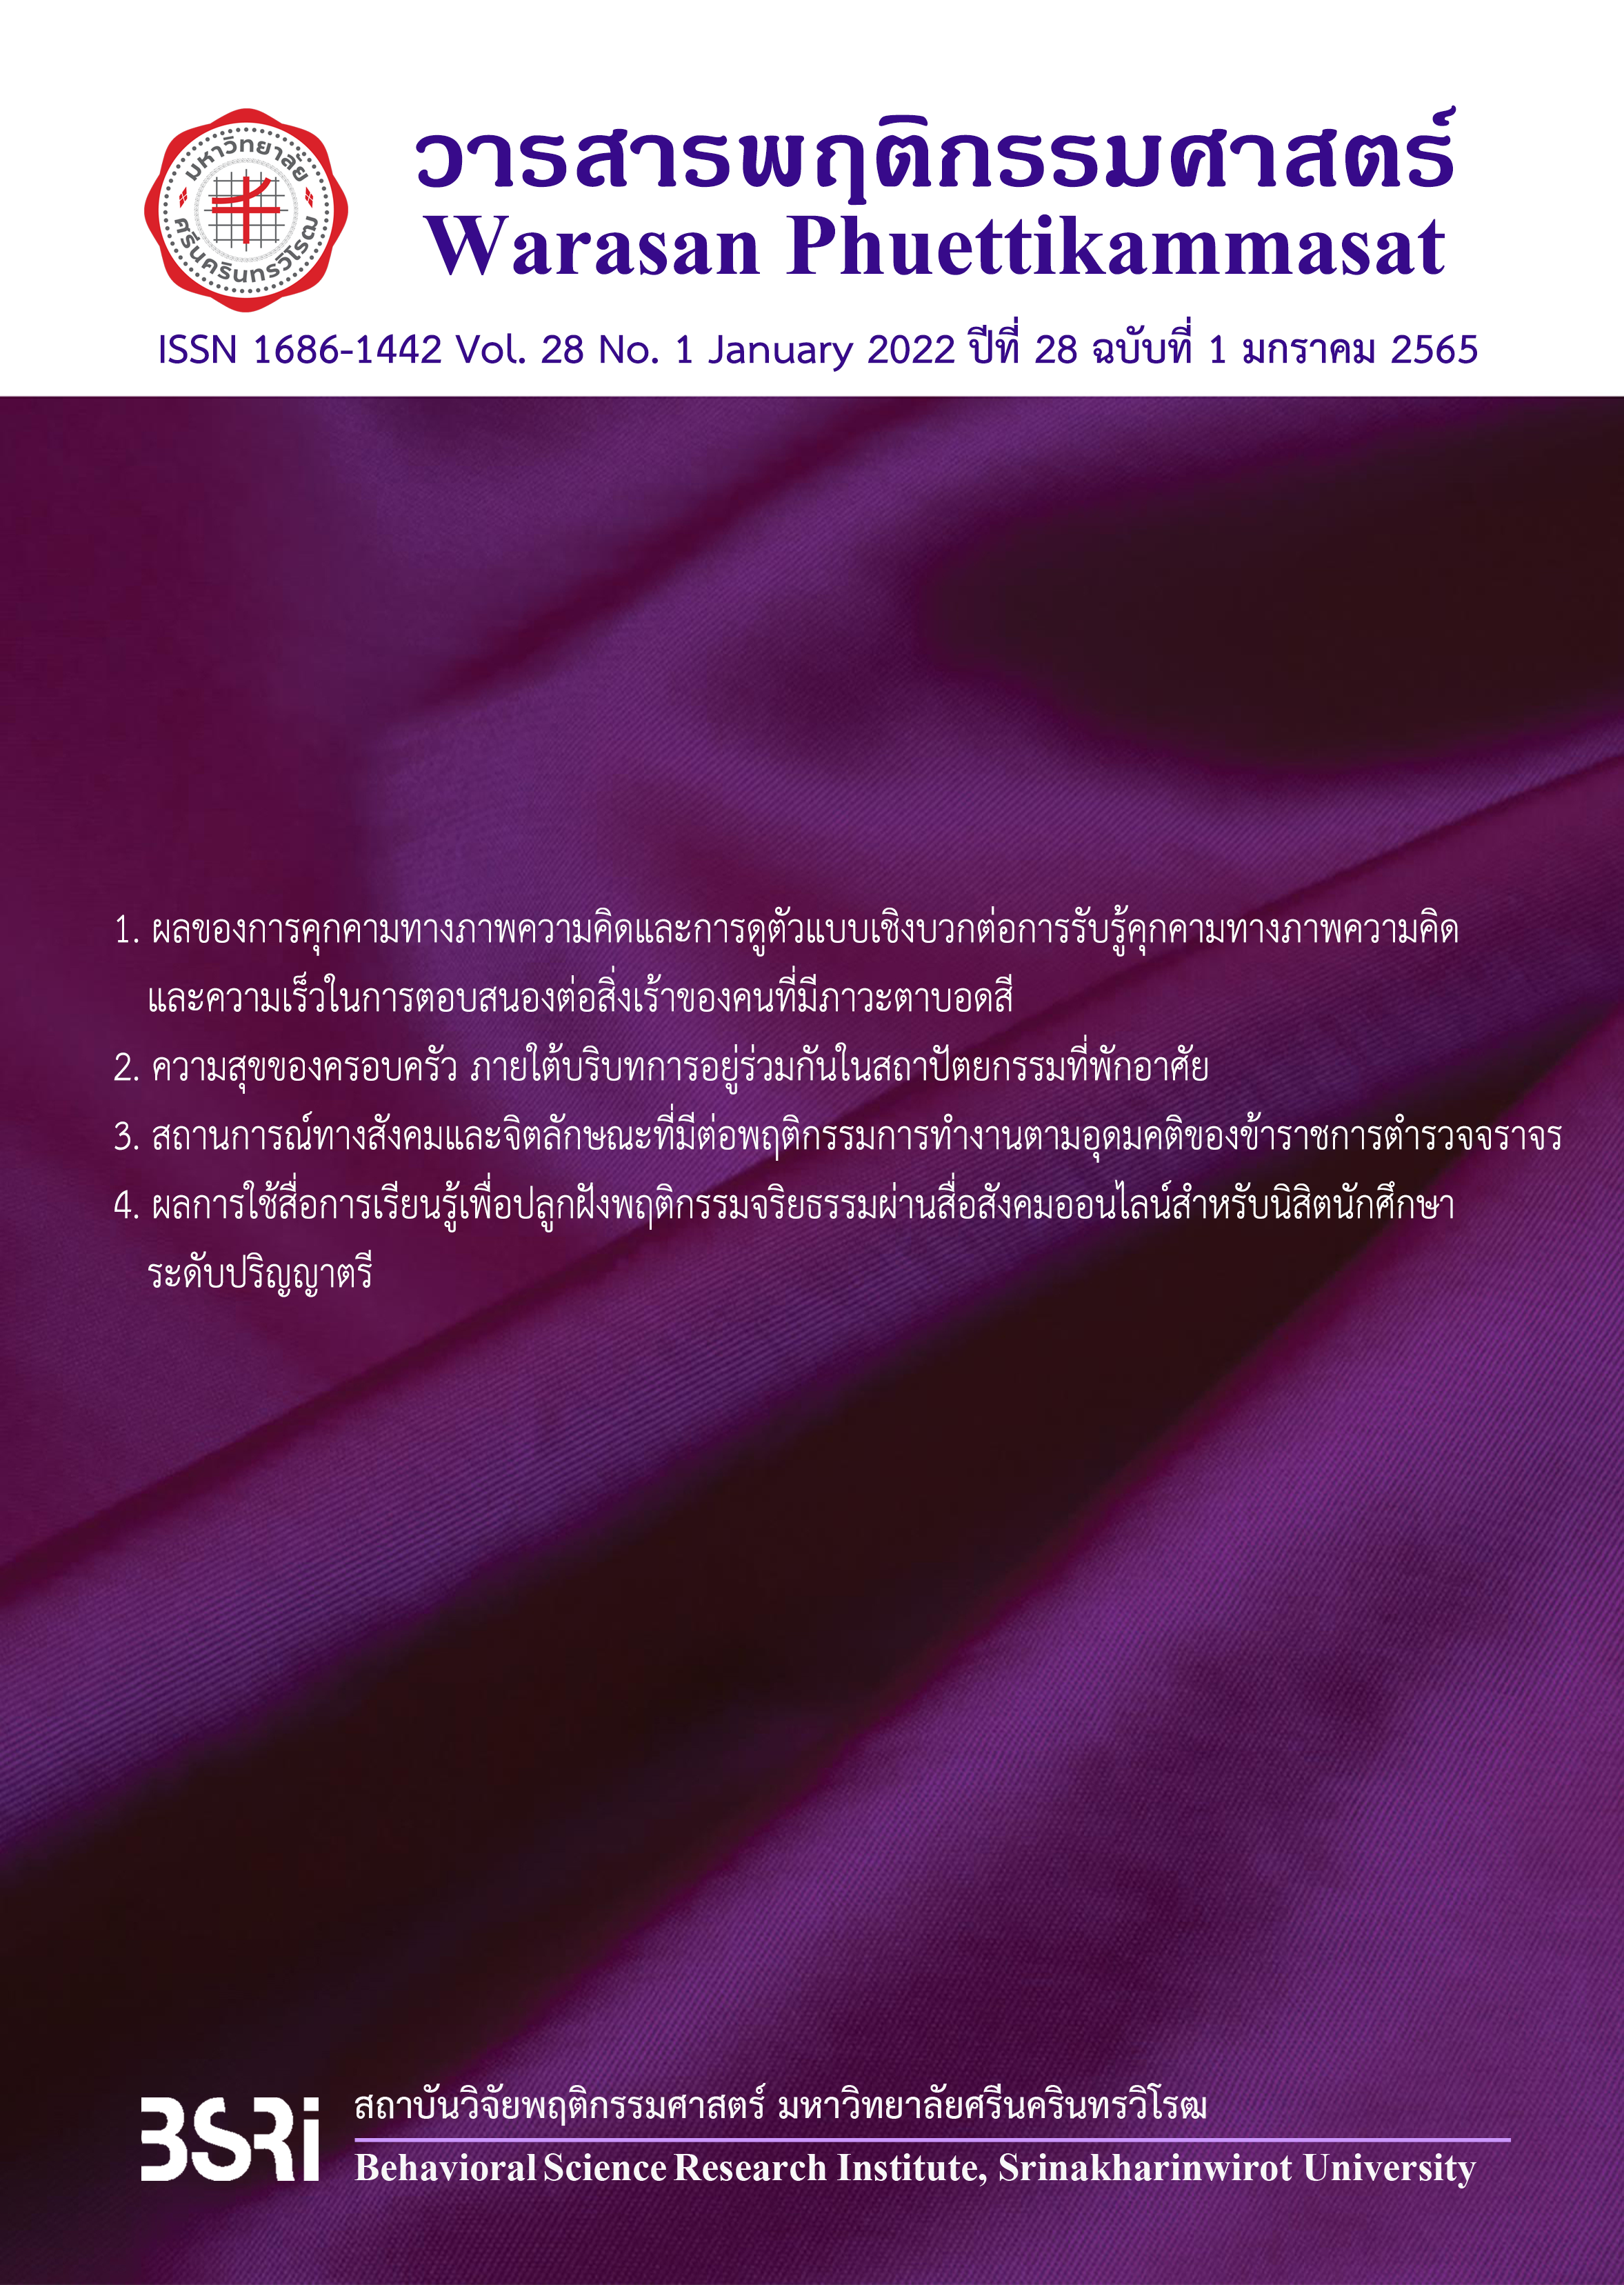 					View Vol. 28 No. 1 (2022): Warasan Phuetikammasart Vol. 28 No. 1 January 2022
				